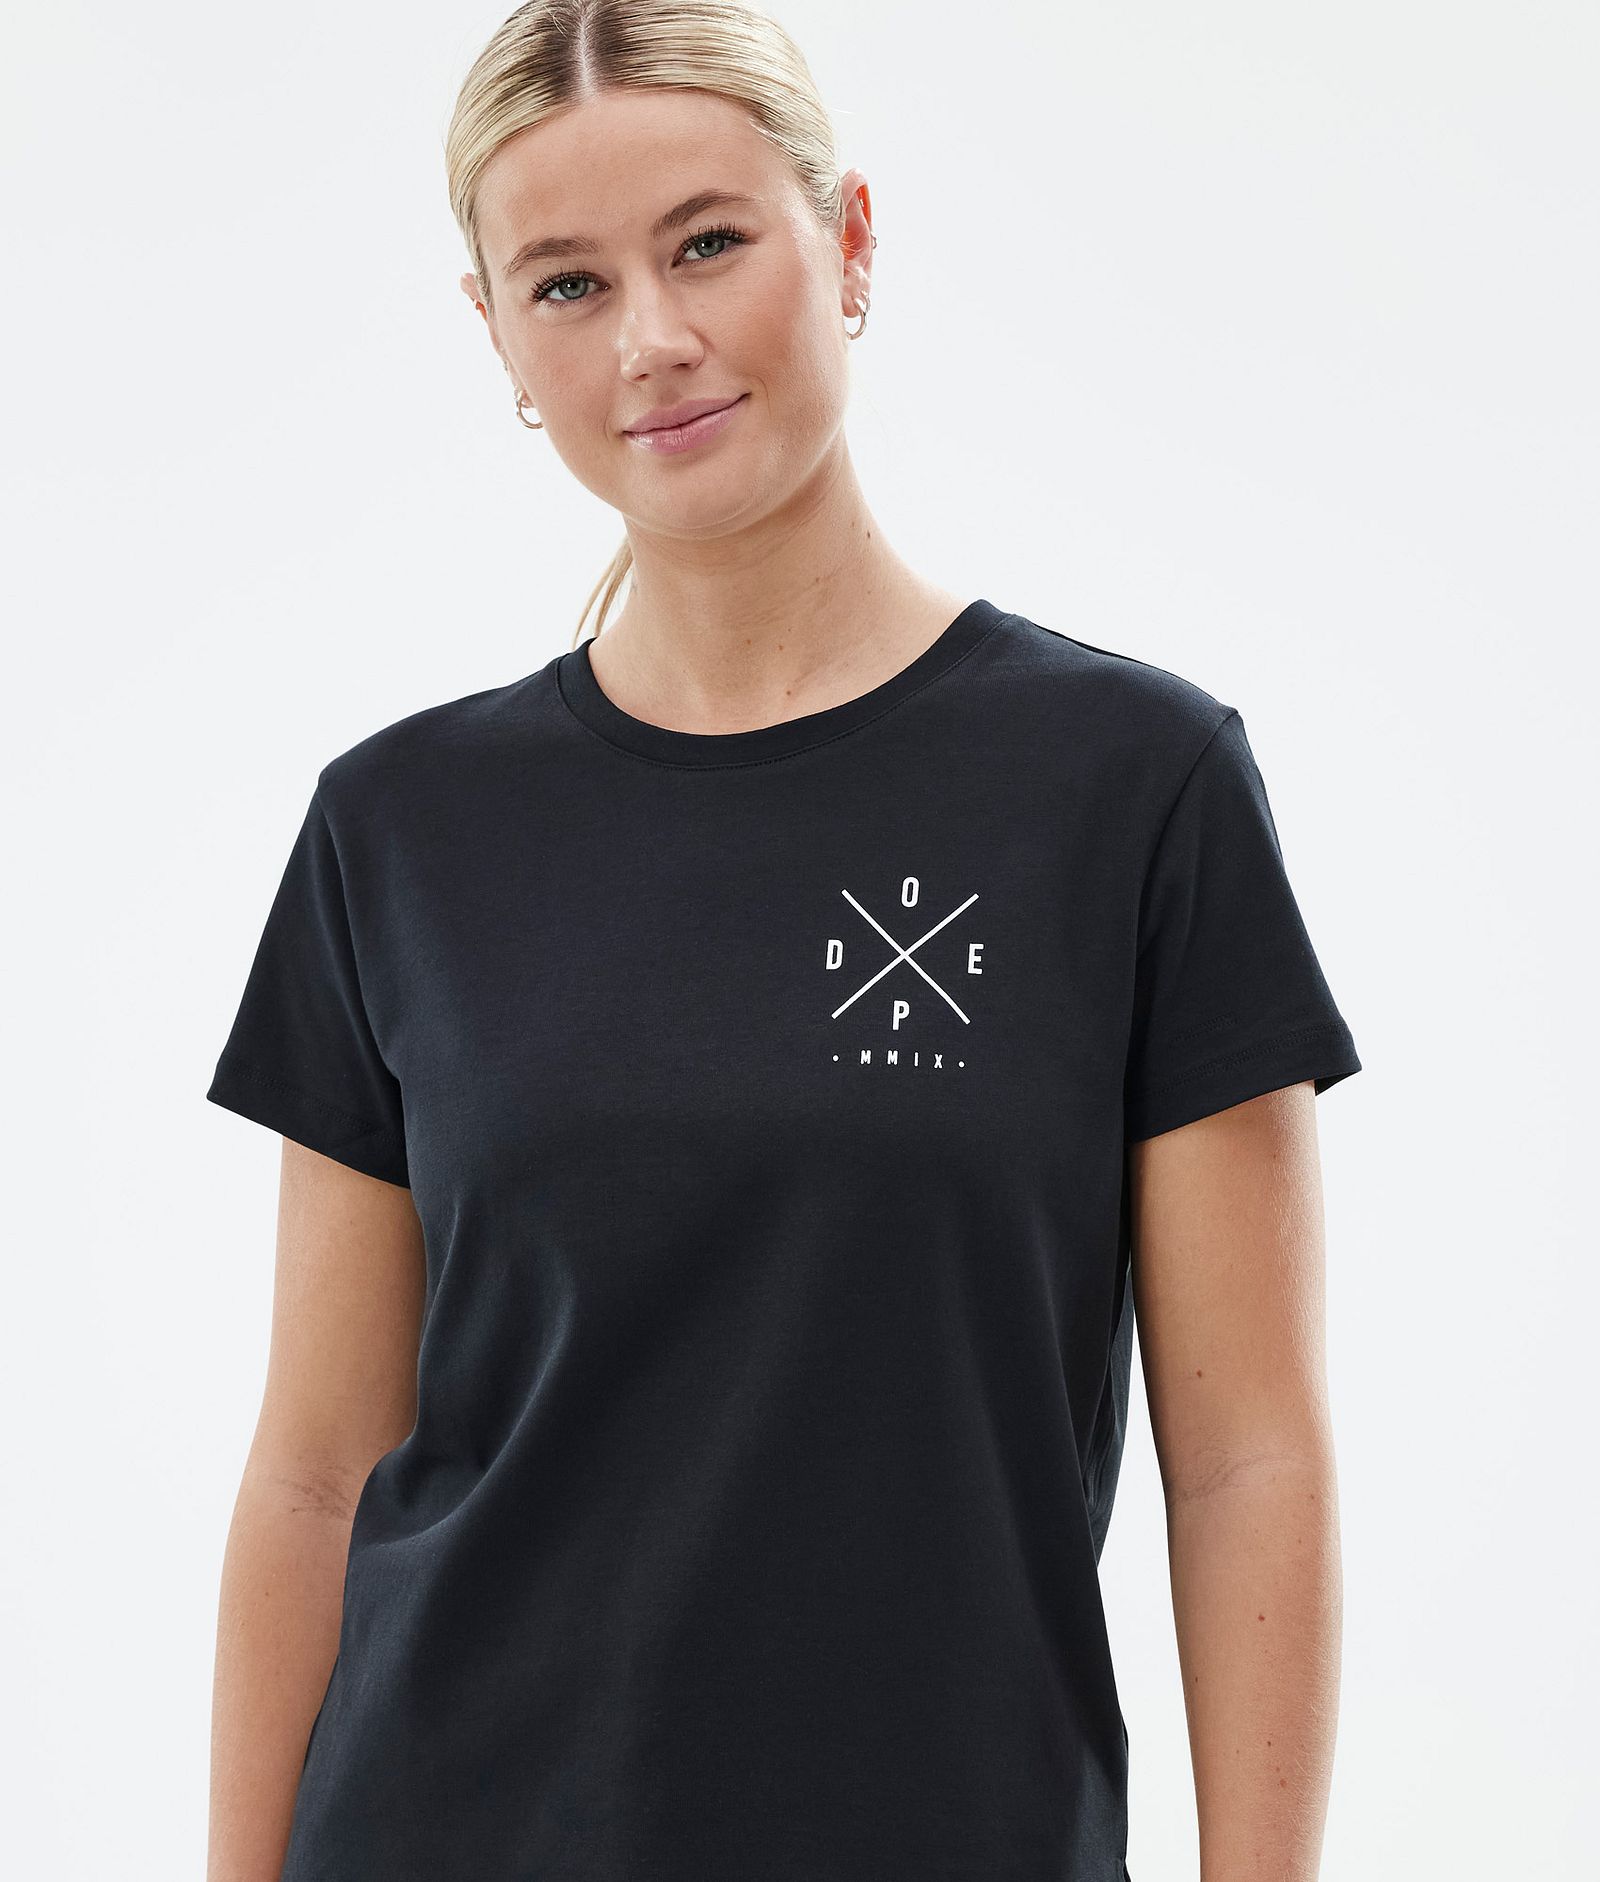 Dope Standard W Camiseta Mujer 2X-Up Black